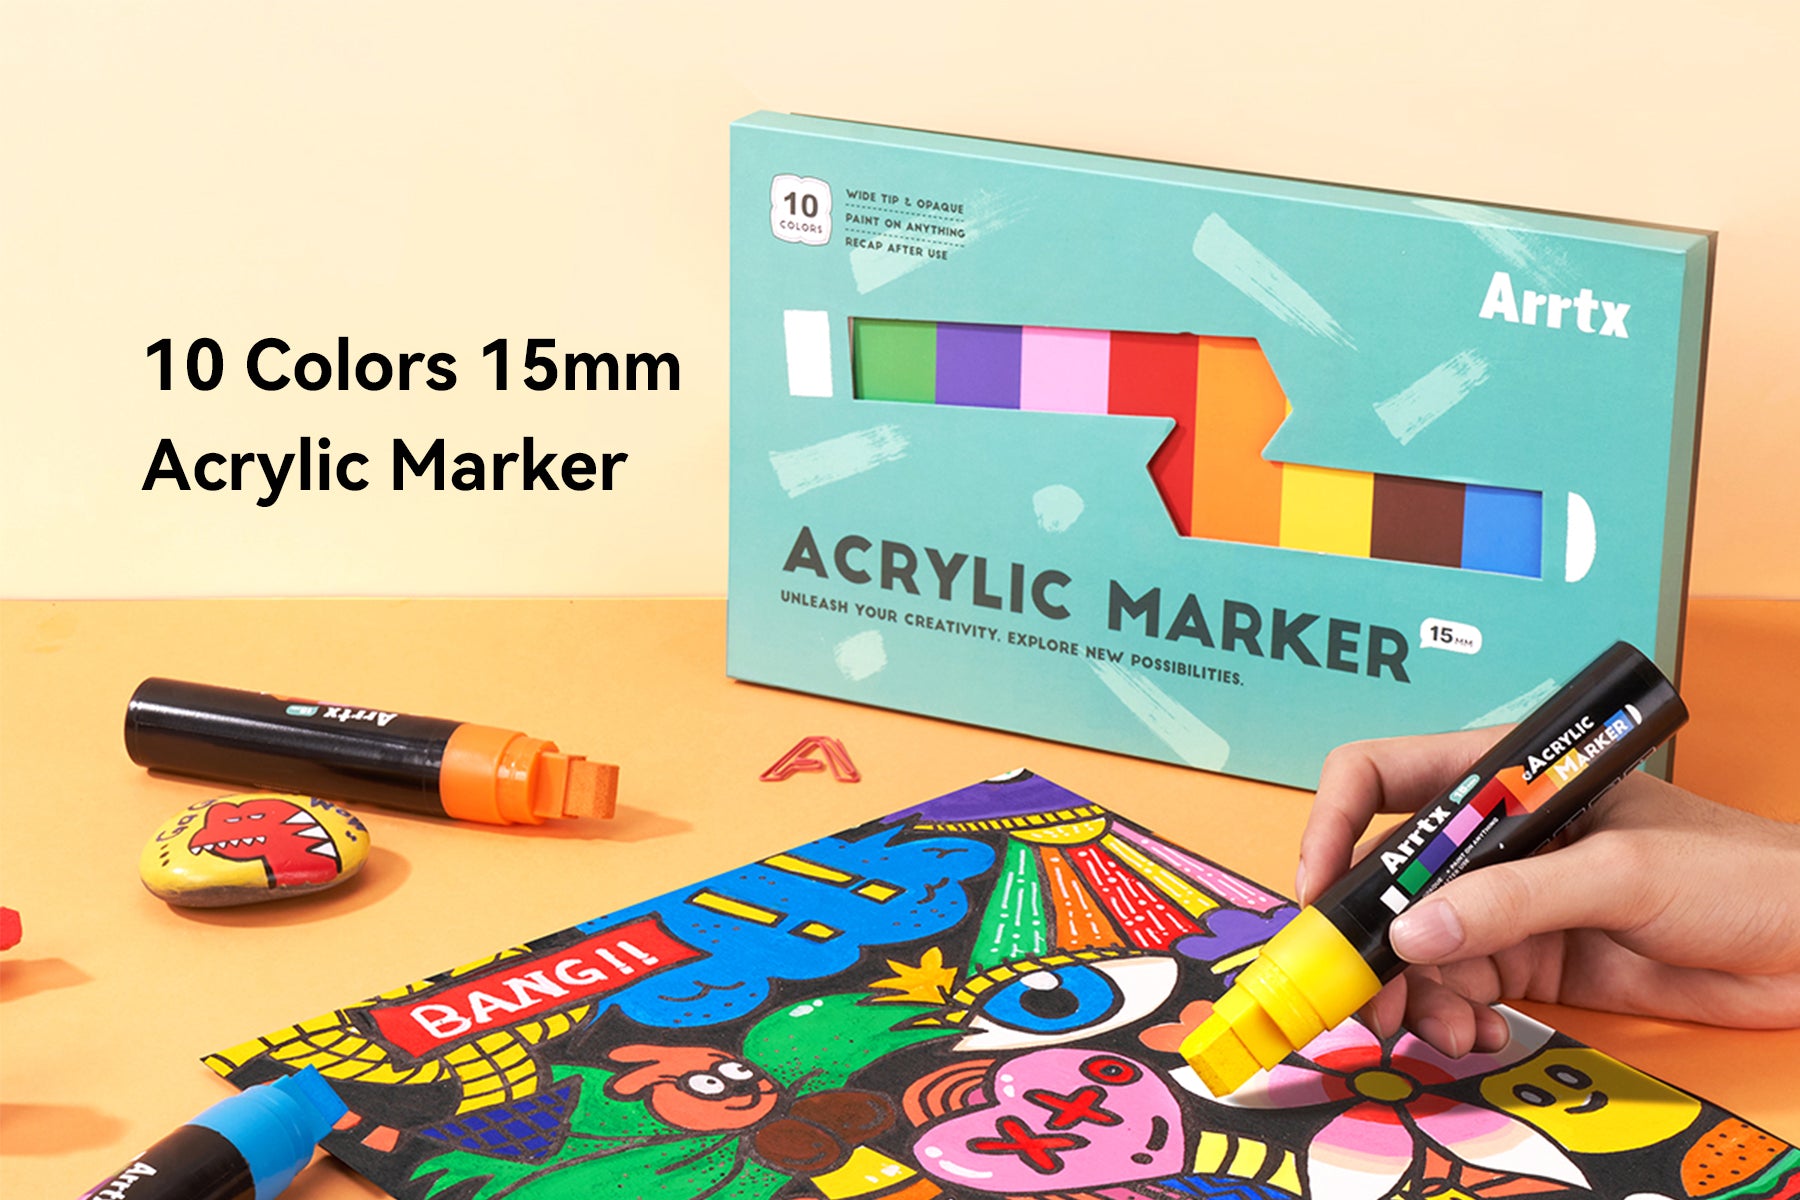 Arrtx 24 Colors Acrylic Marker, Brush Tip and Fine Tip (Dual Tip) – ArrtxArt